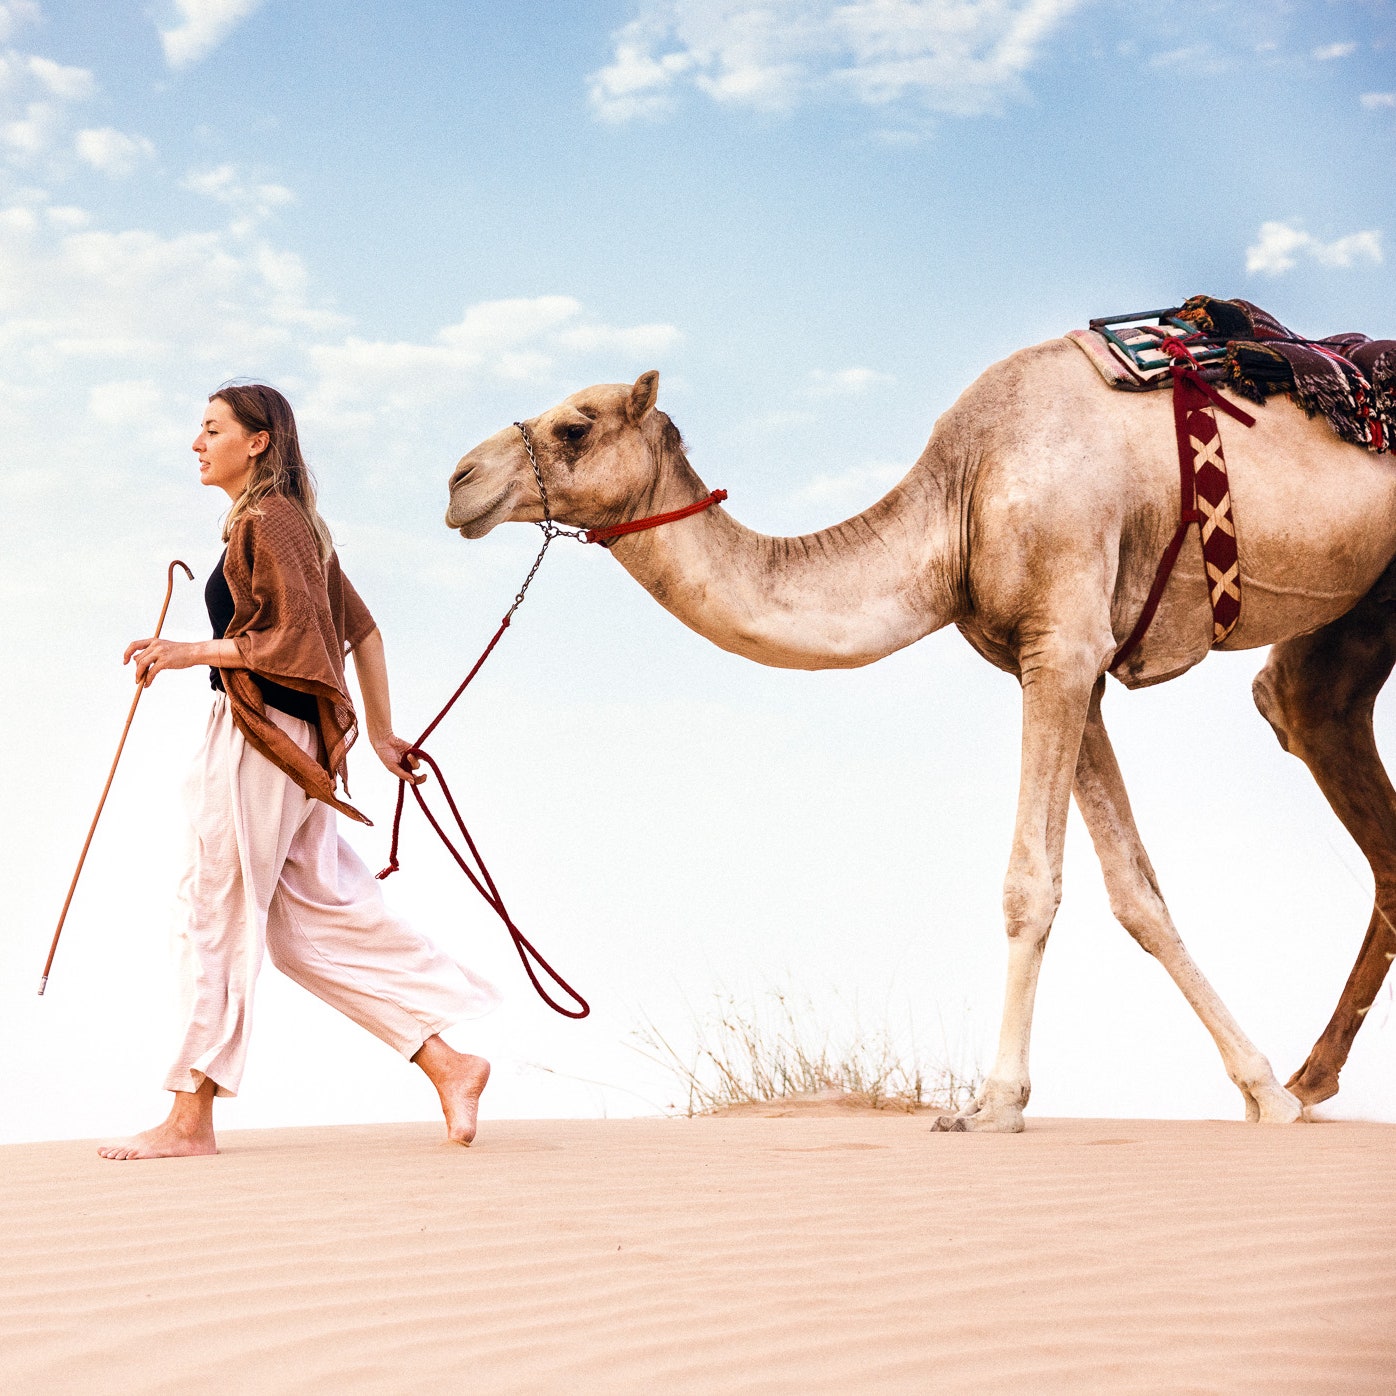 Meet Dubai's female camel jockeys racing their way into the record books